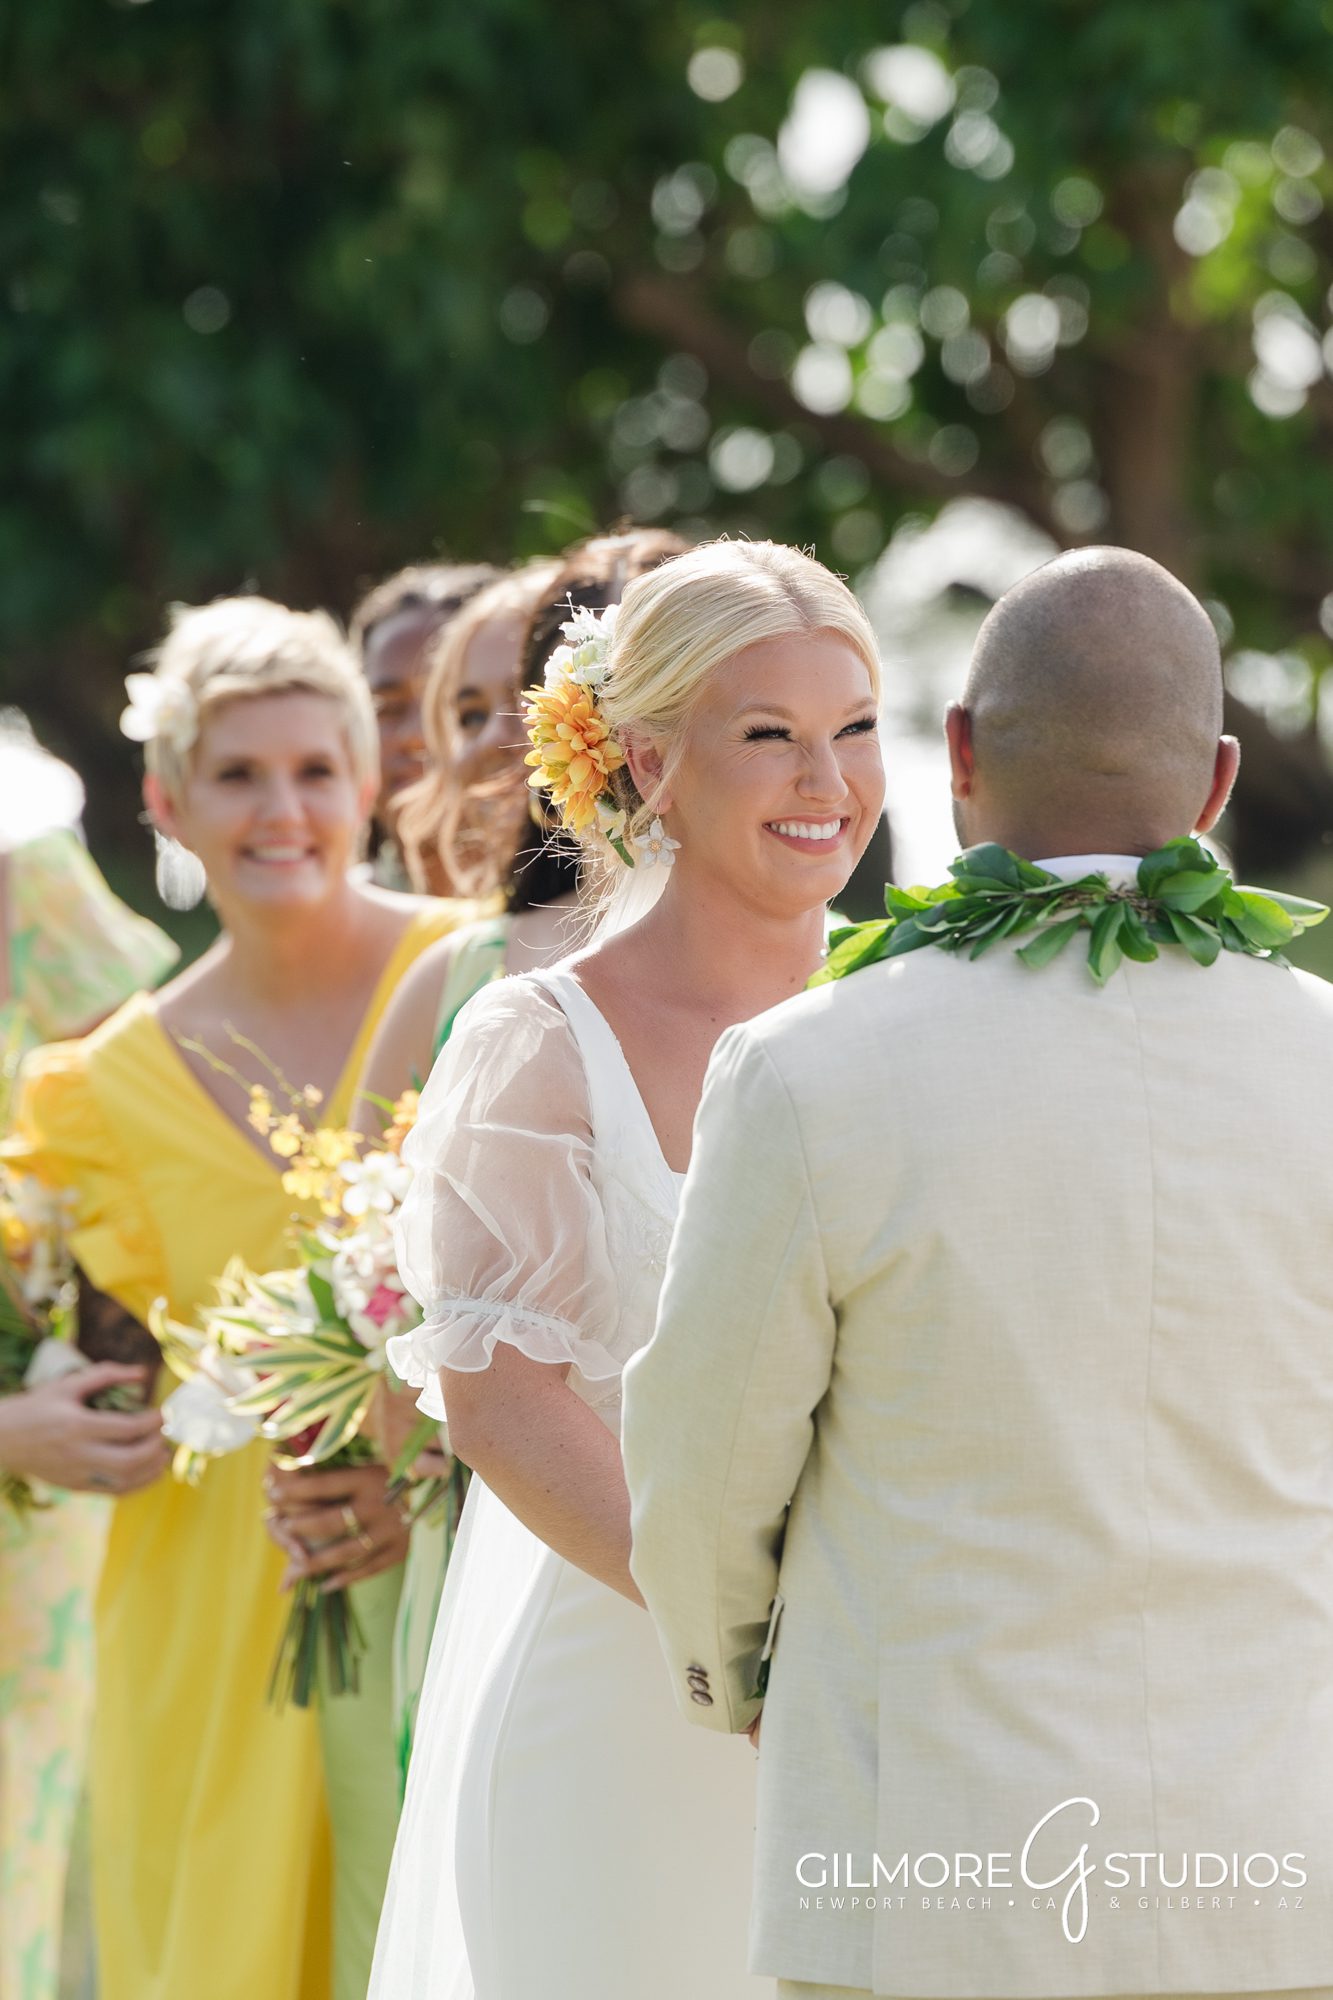 Loulu Palm Wedding Photography, Oahu Weddings - North Shore - Hawaii - Hawaiian Wedding Venue - Beach Wedding - Aloha Wedding - Gilmore Studios - wedding day - wedding flowers - bouquet - tropical flower - island - beach wedding ceremony